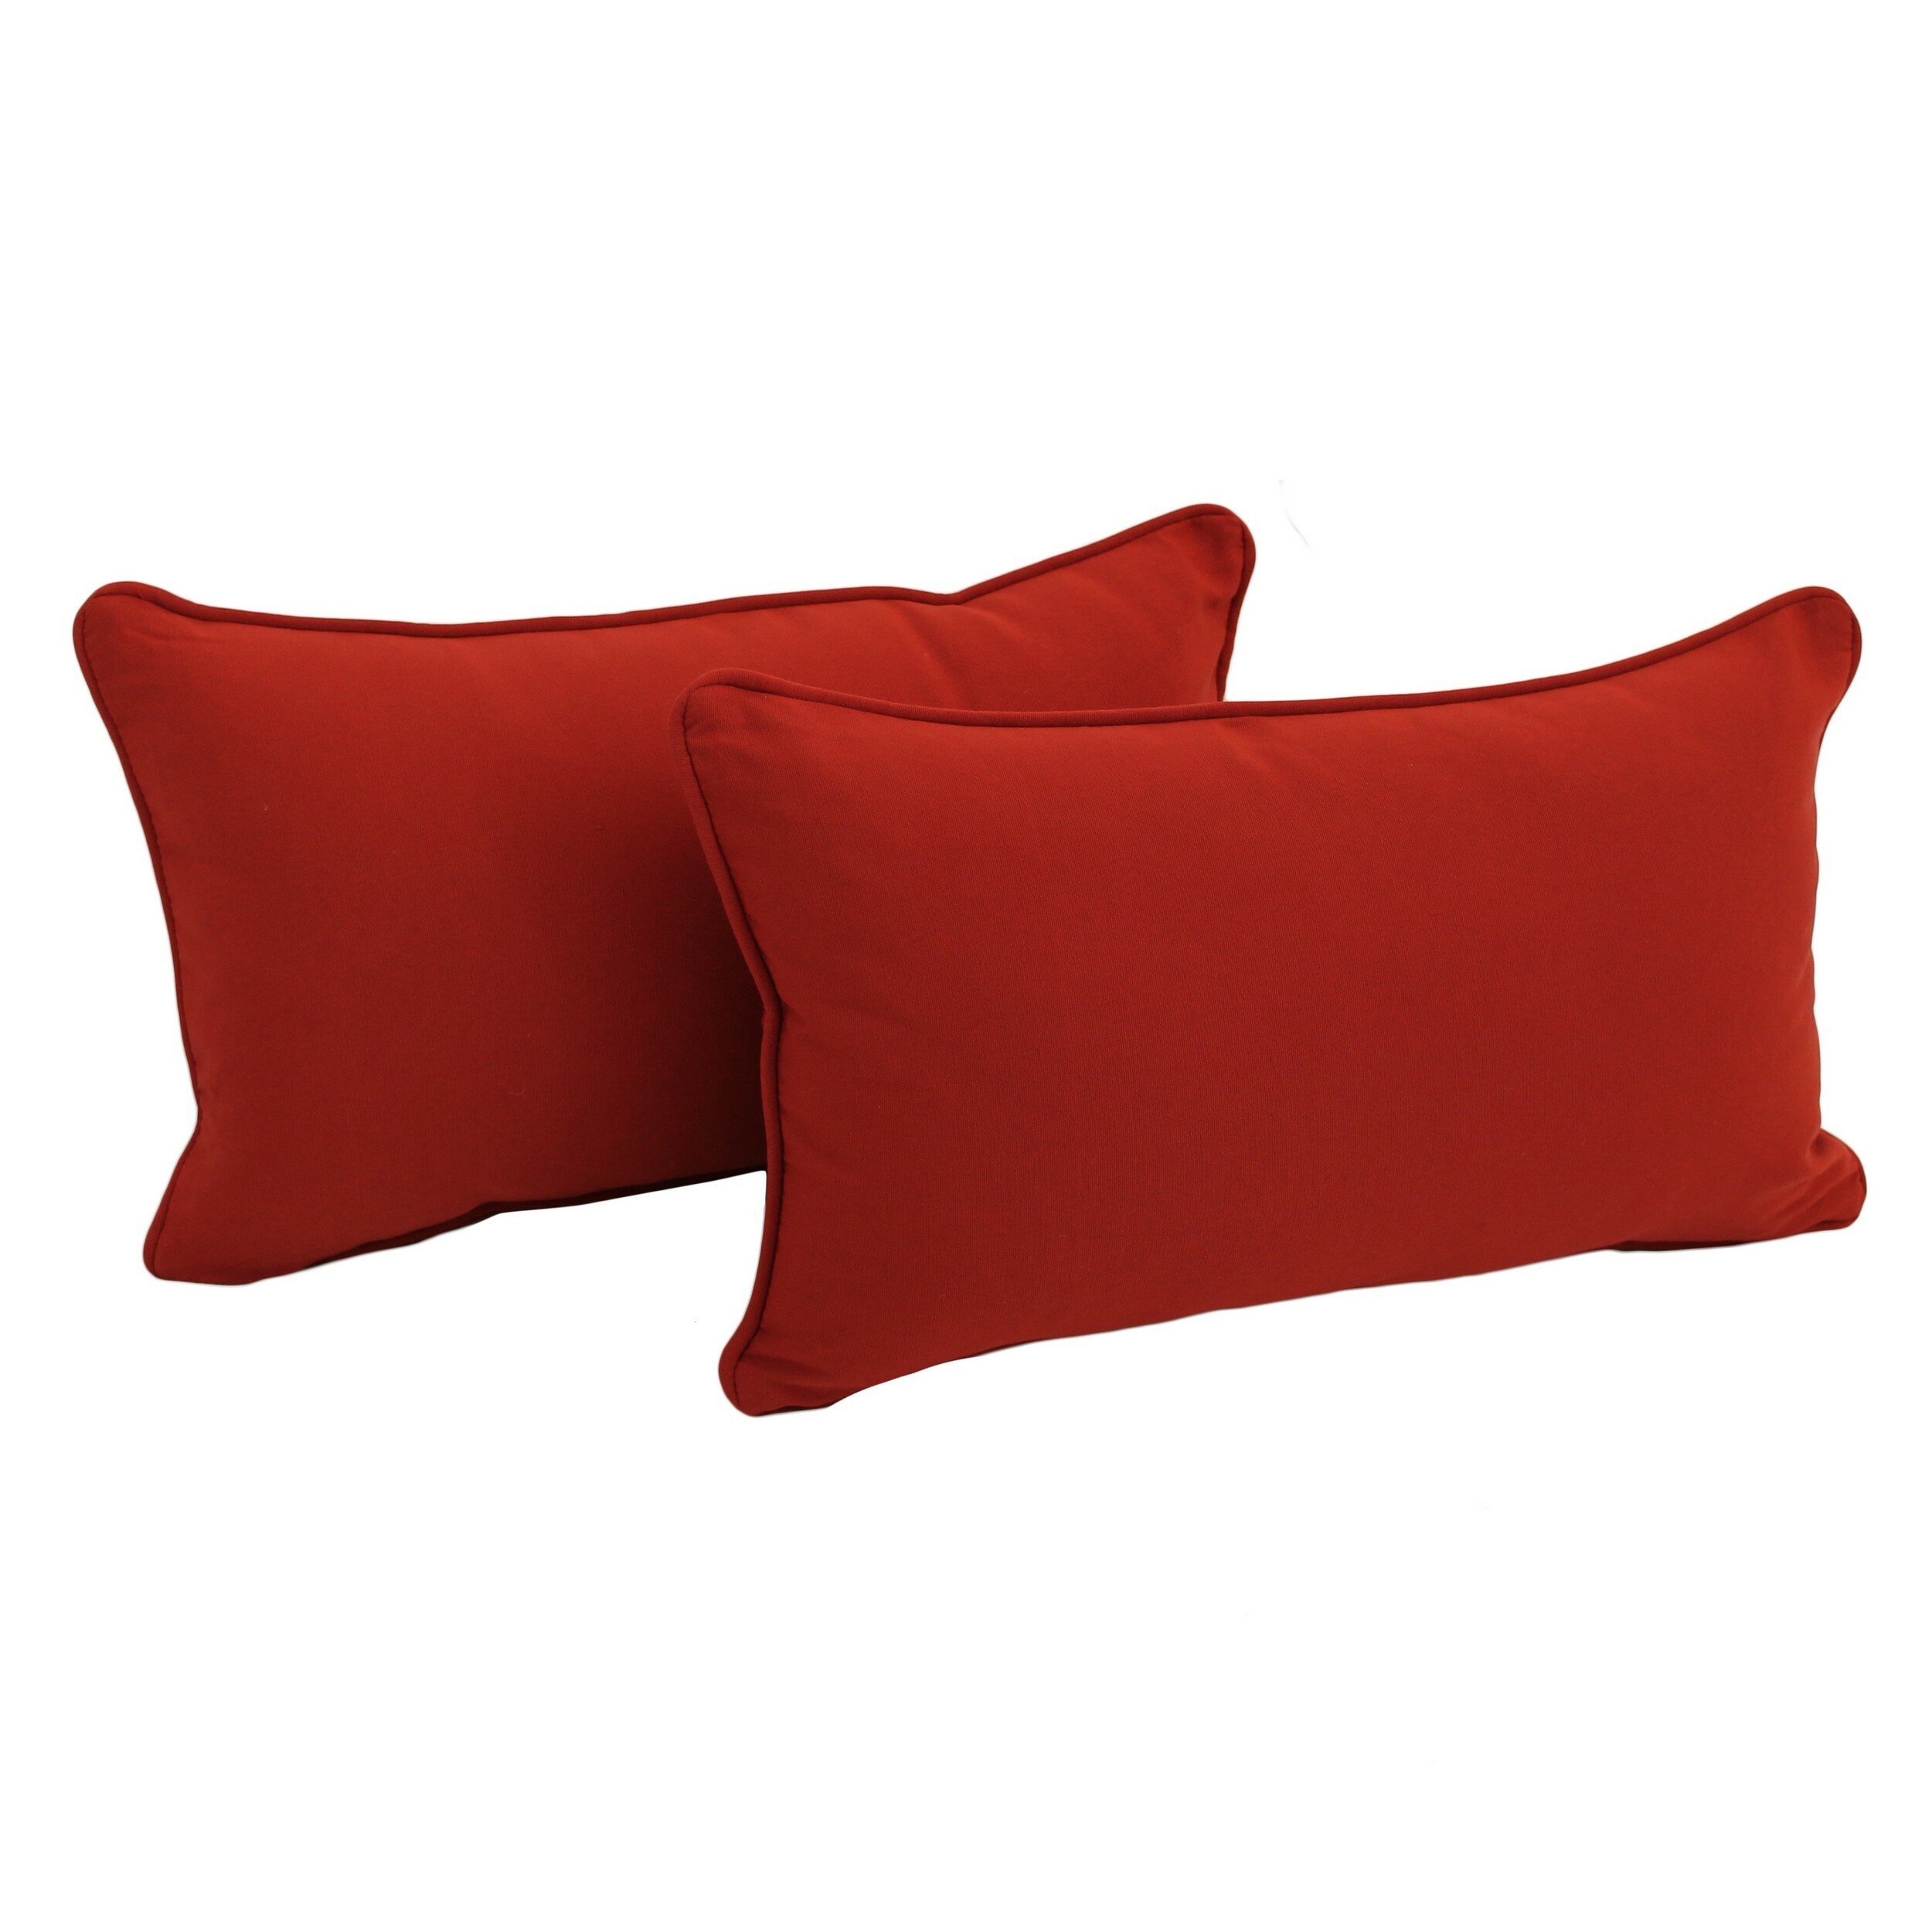 E by design Decorative Pillow Red Beige Black 